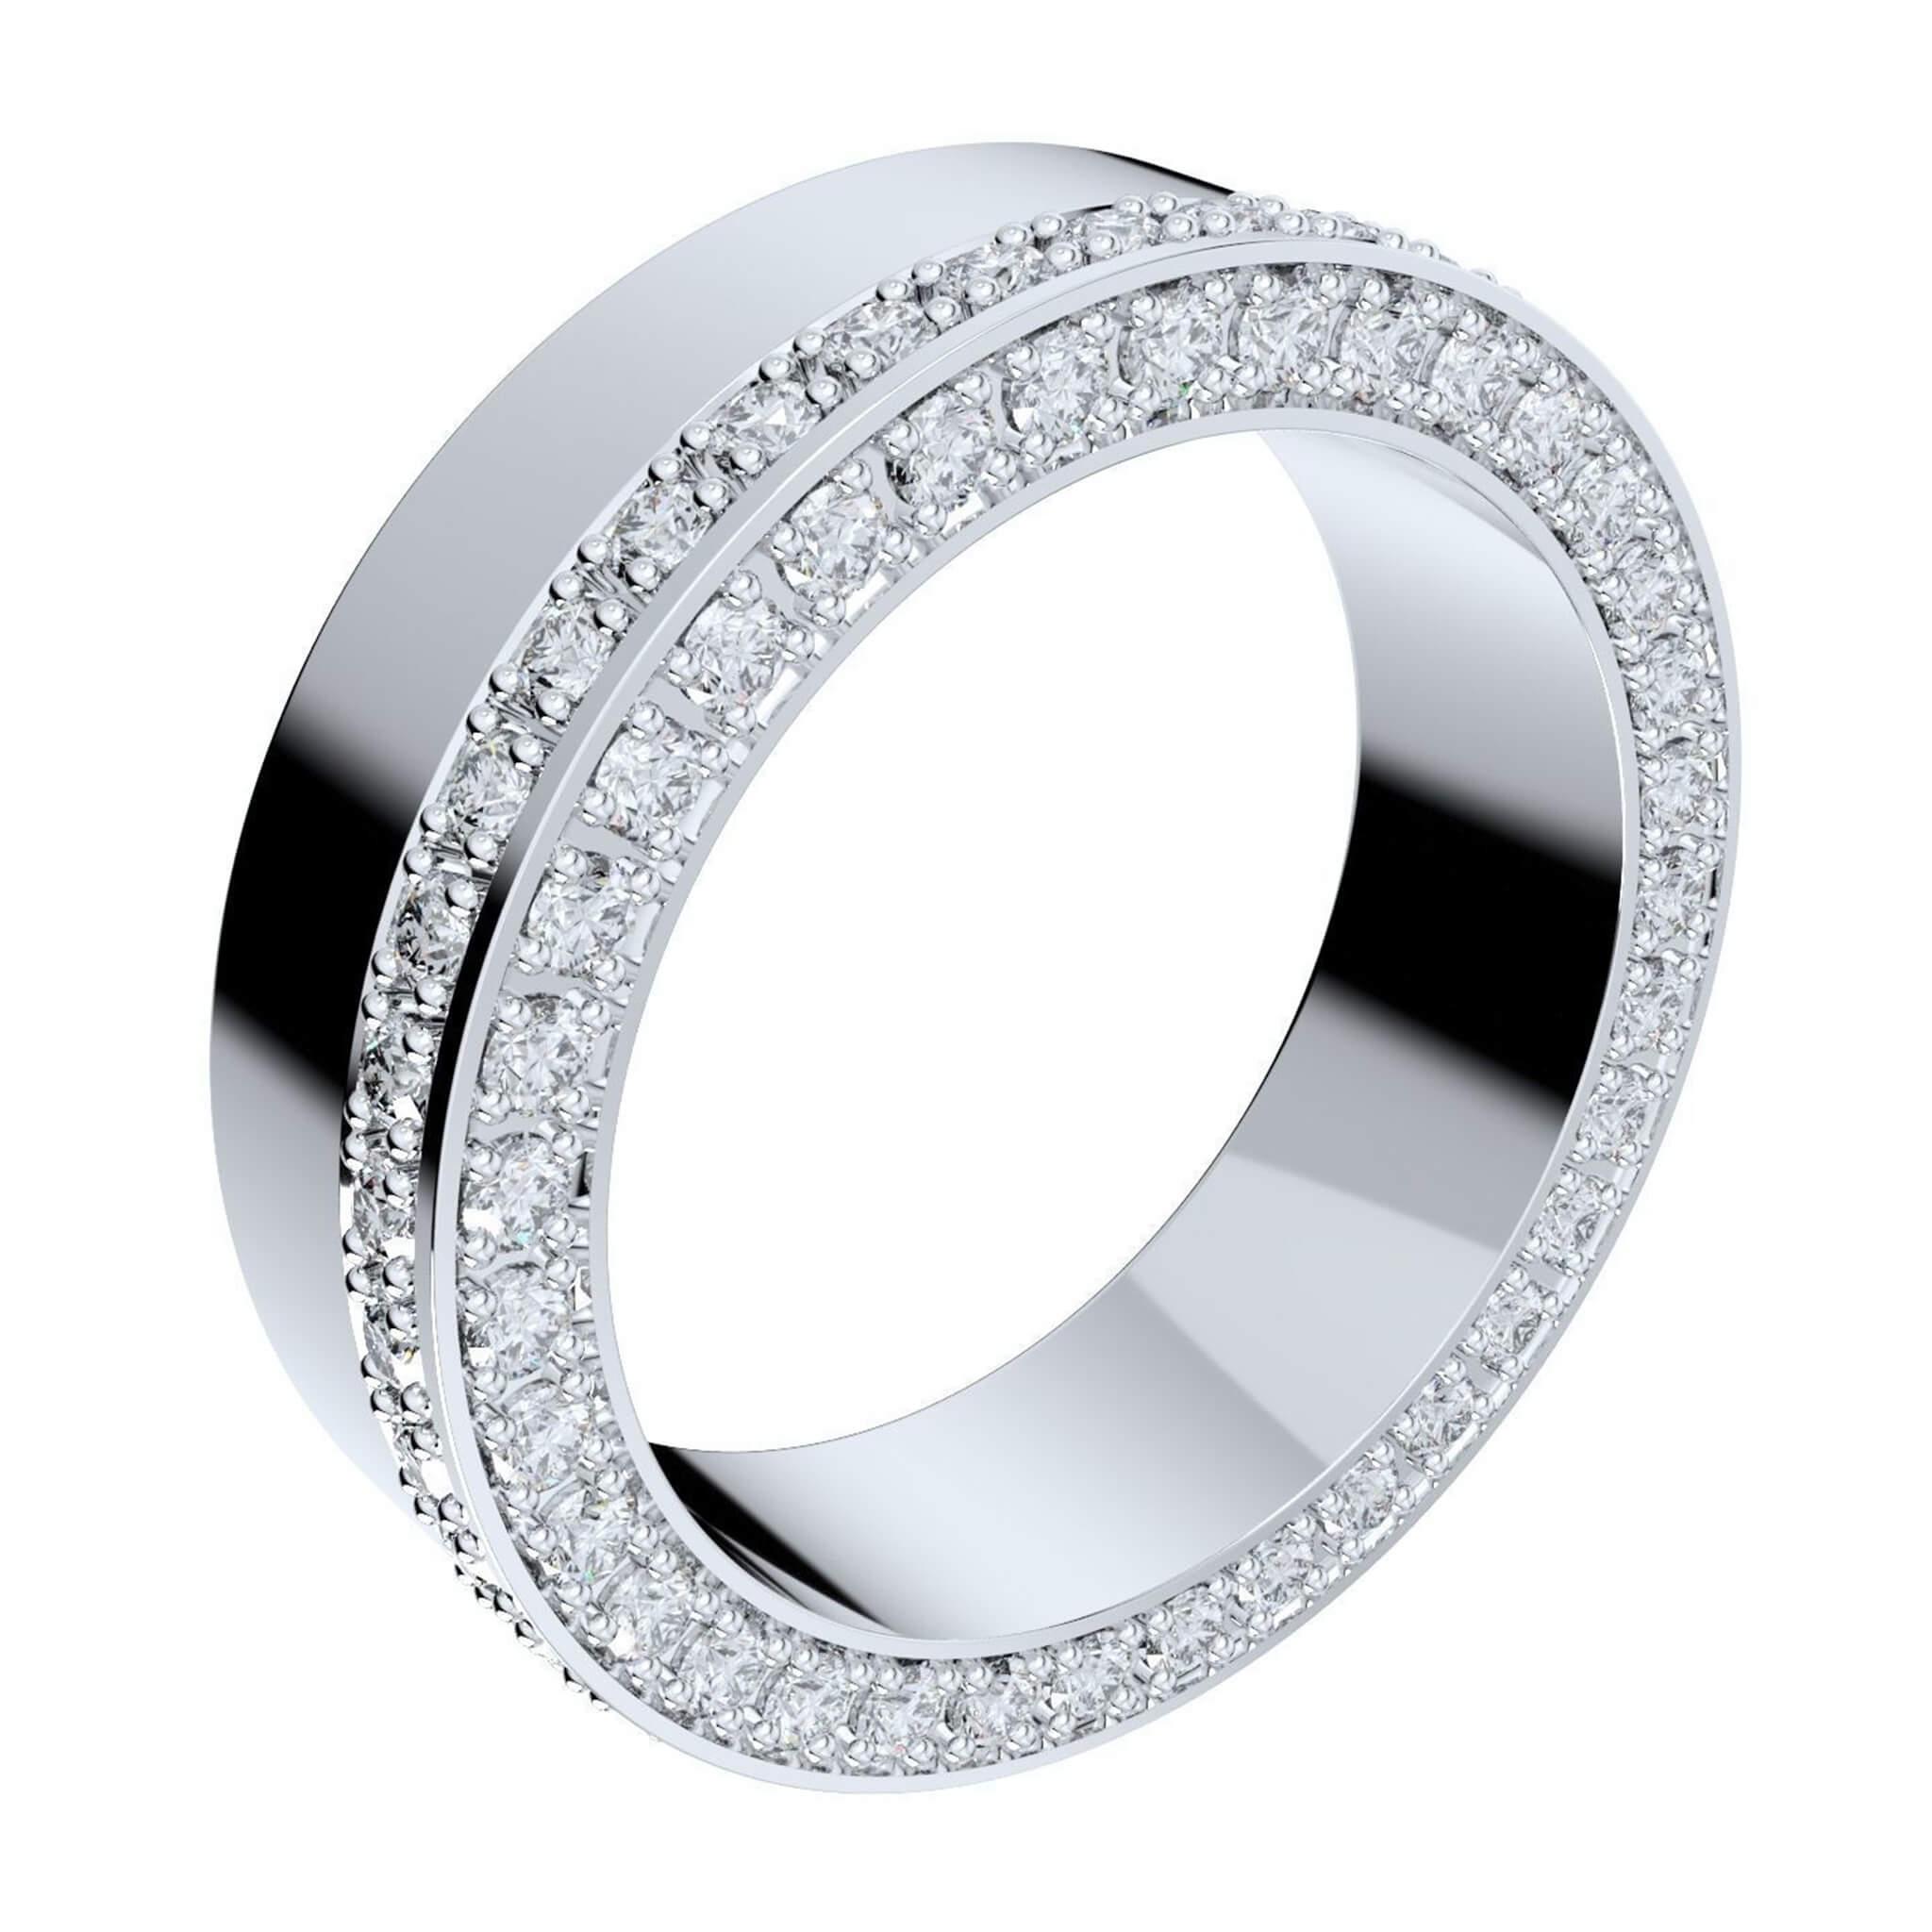 Mateo White Gold or Platinum - Mens Diamond Ring with a Diamond Edge - Monroe Yorke Diamonds